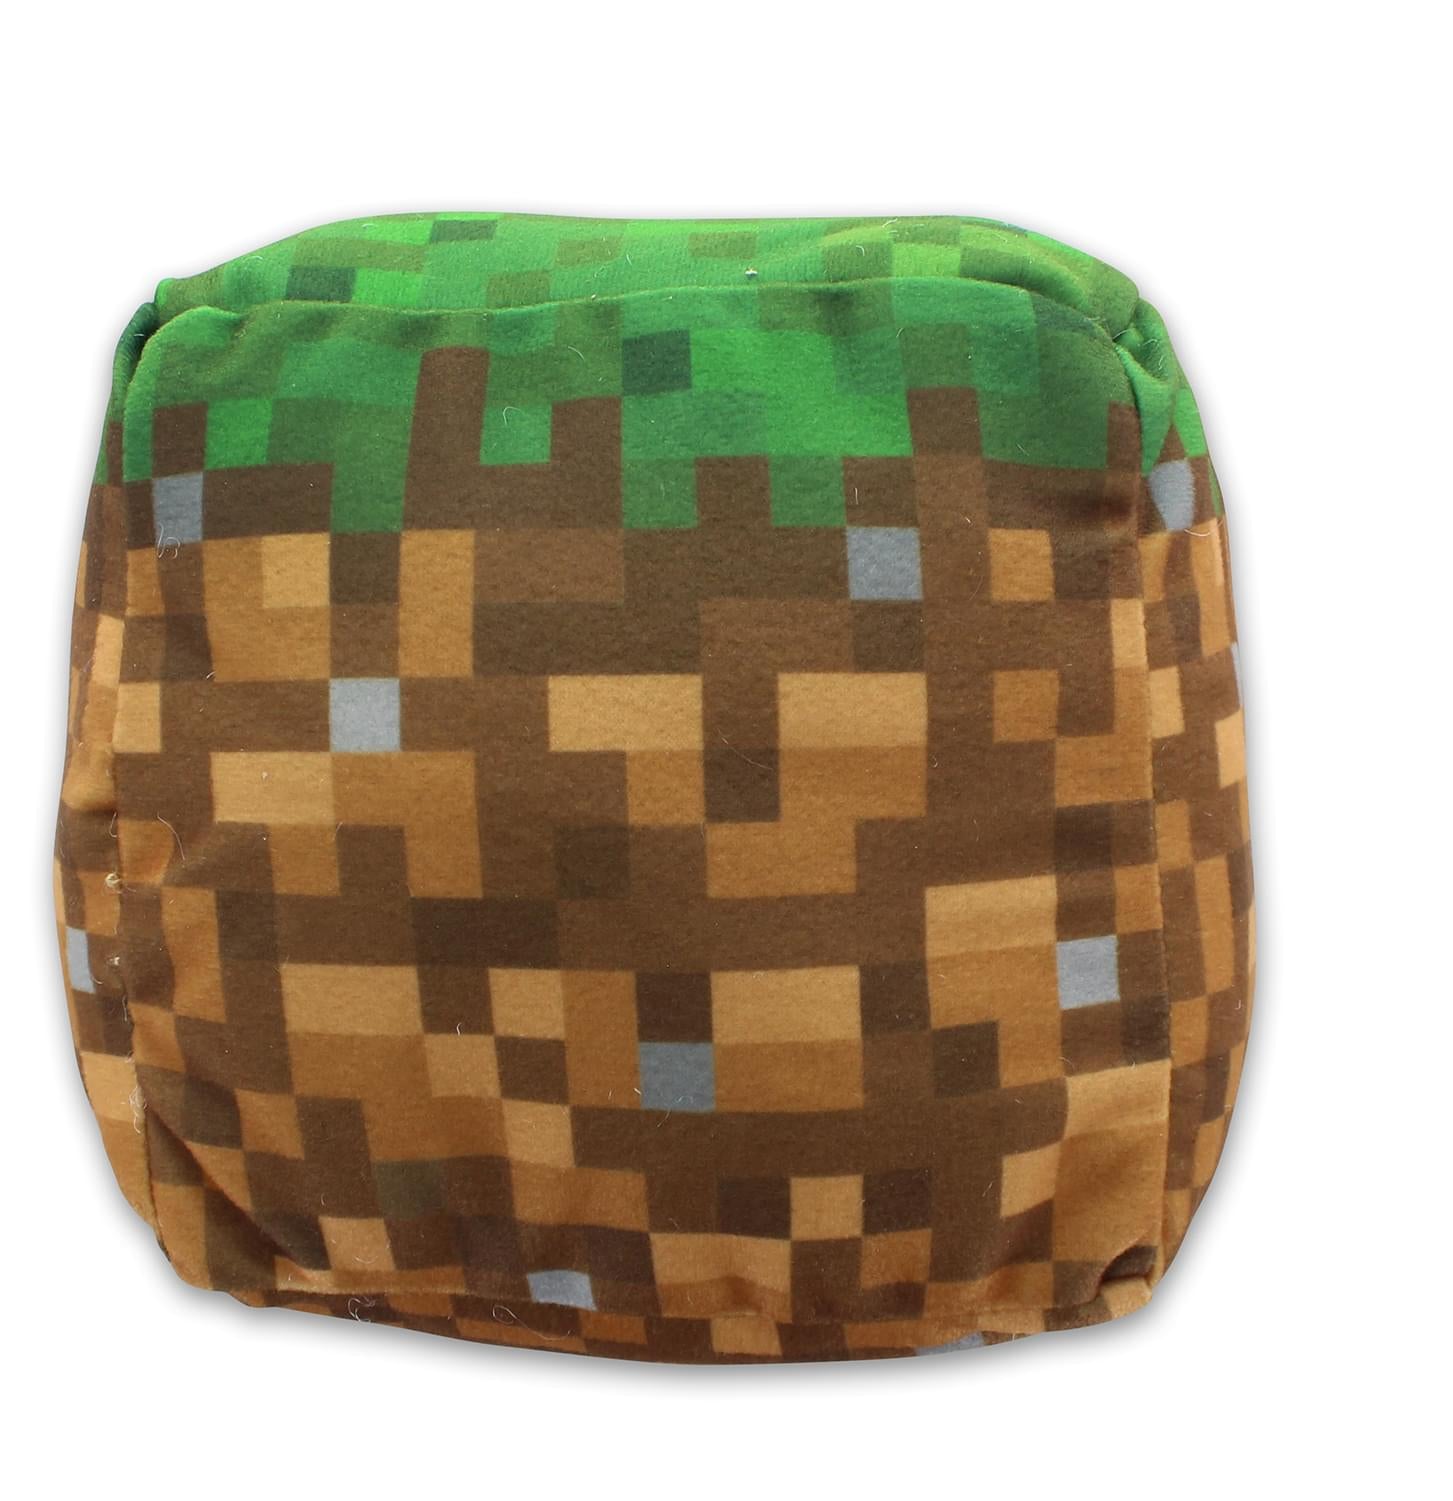 Minecraft 7 Inch Stuffed Character Plush , Grass Cube